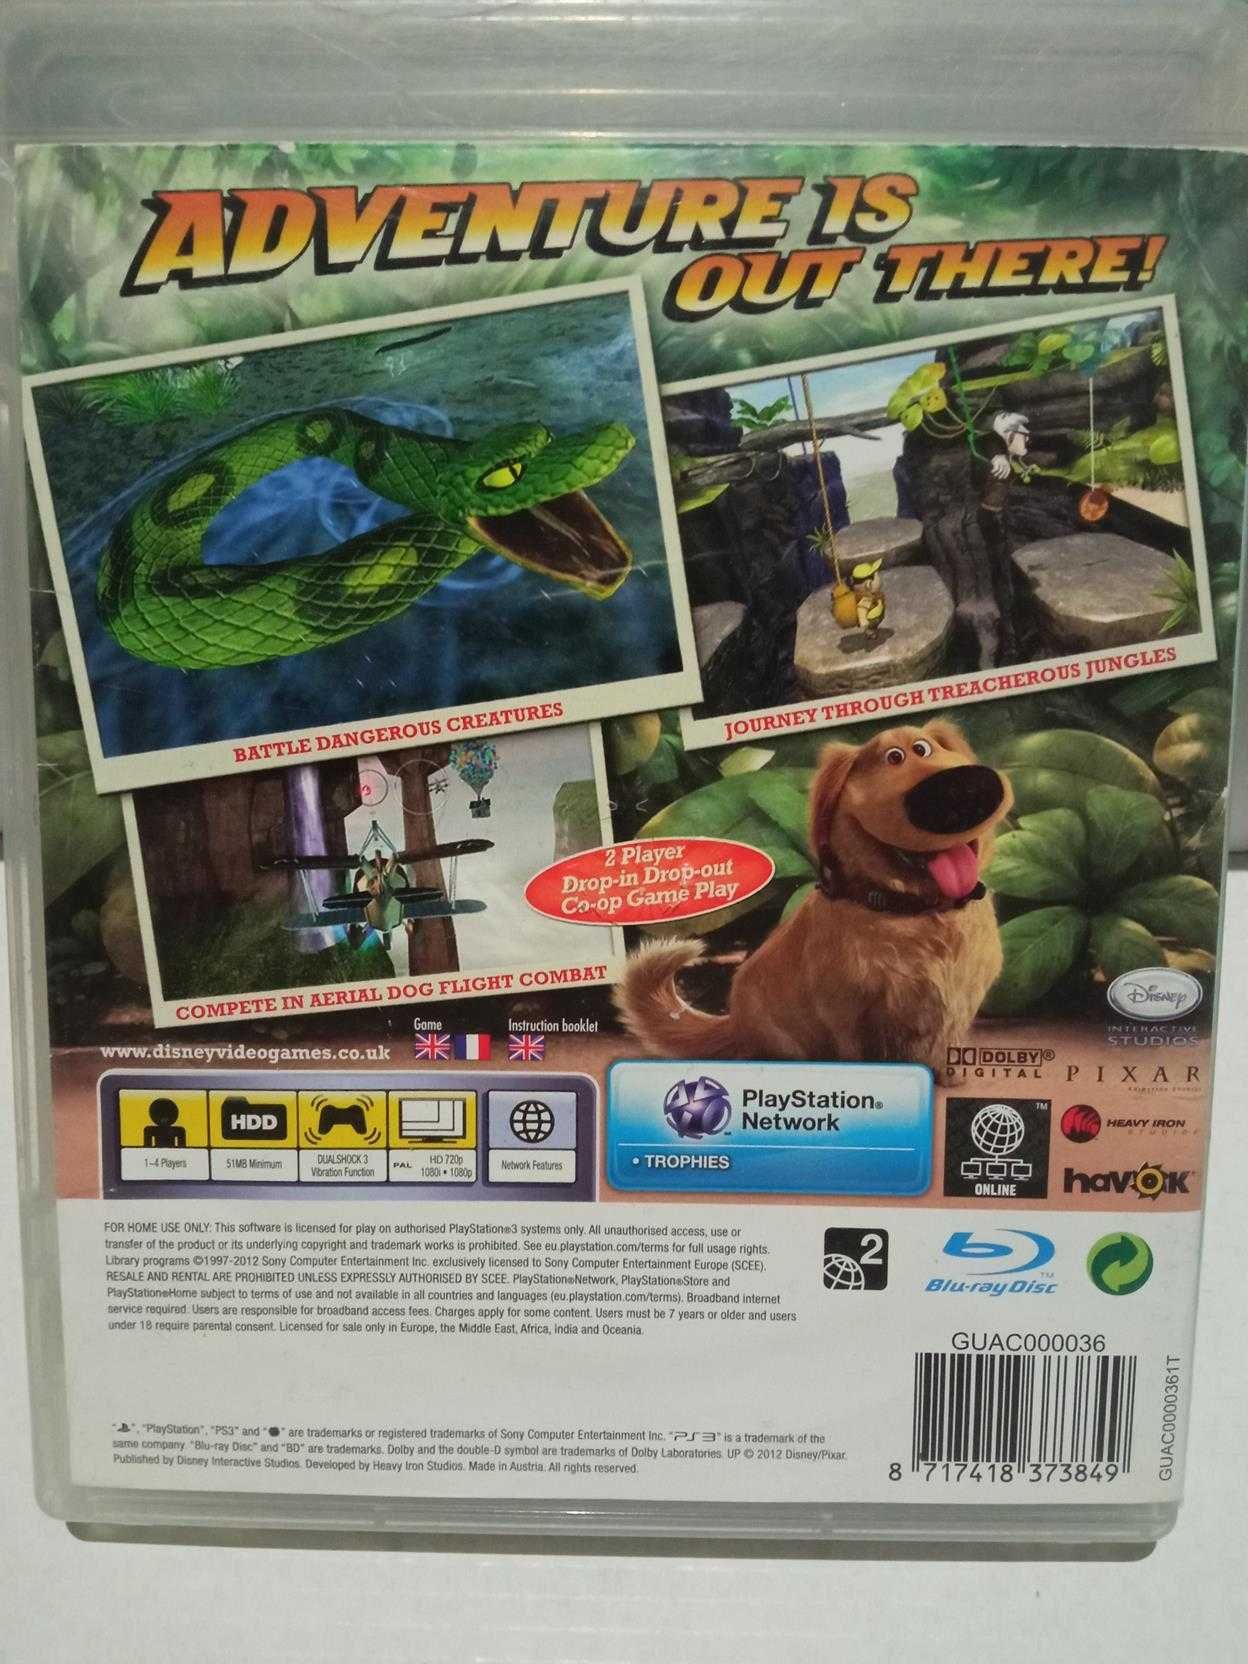 Gra ODLOT PS3 Up: The Video Game dla dzieci Bajka film